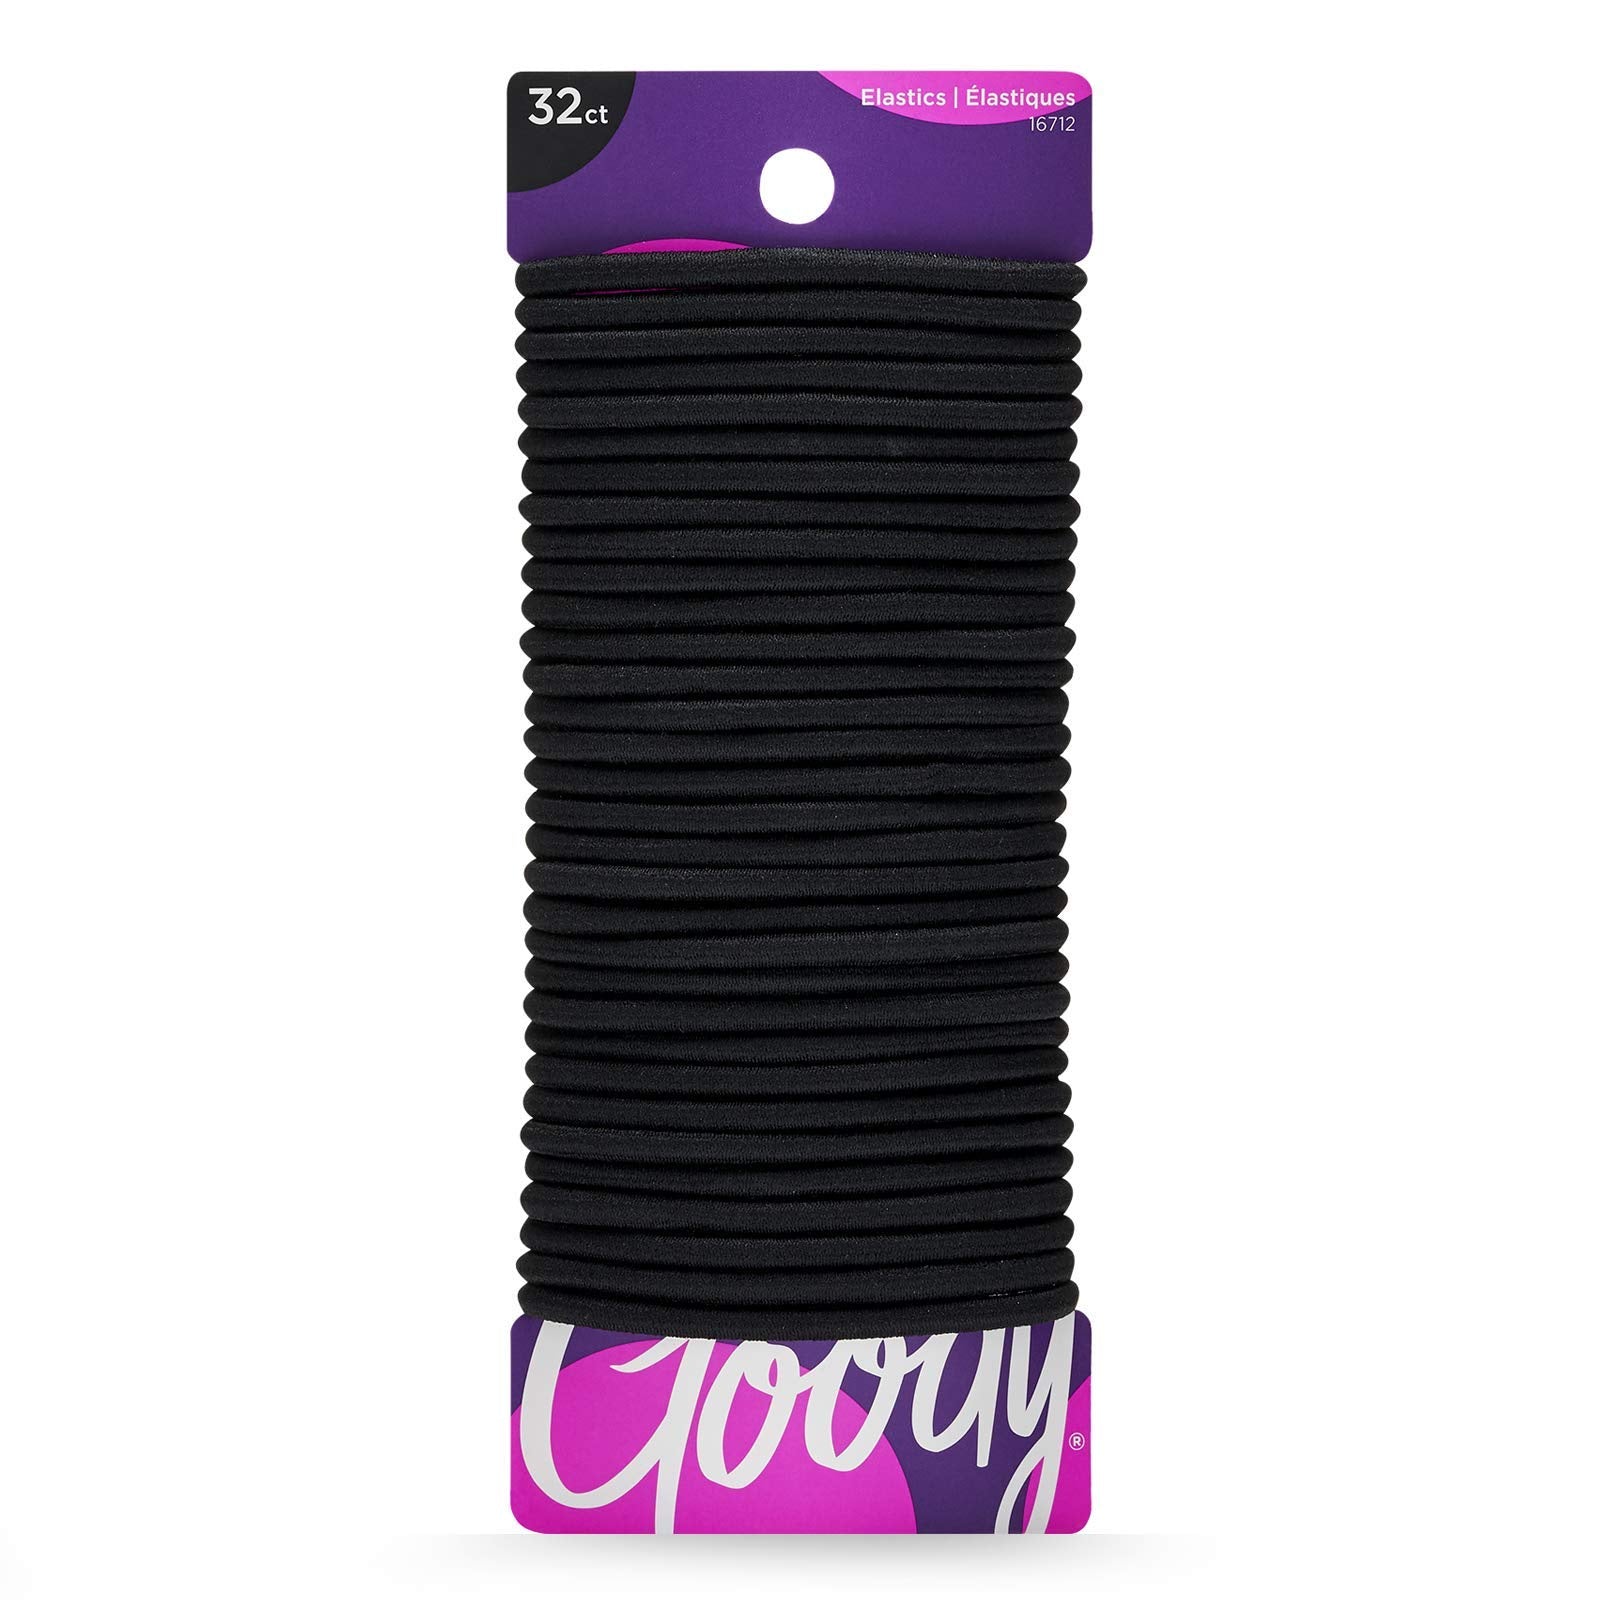 Goody Black Hair Elastics 32ct